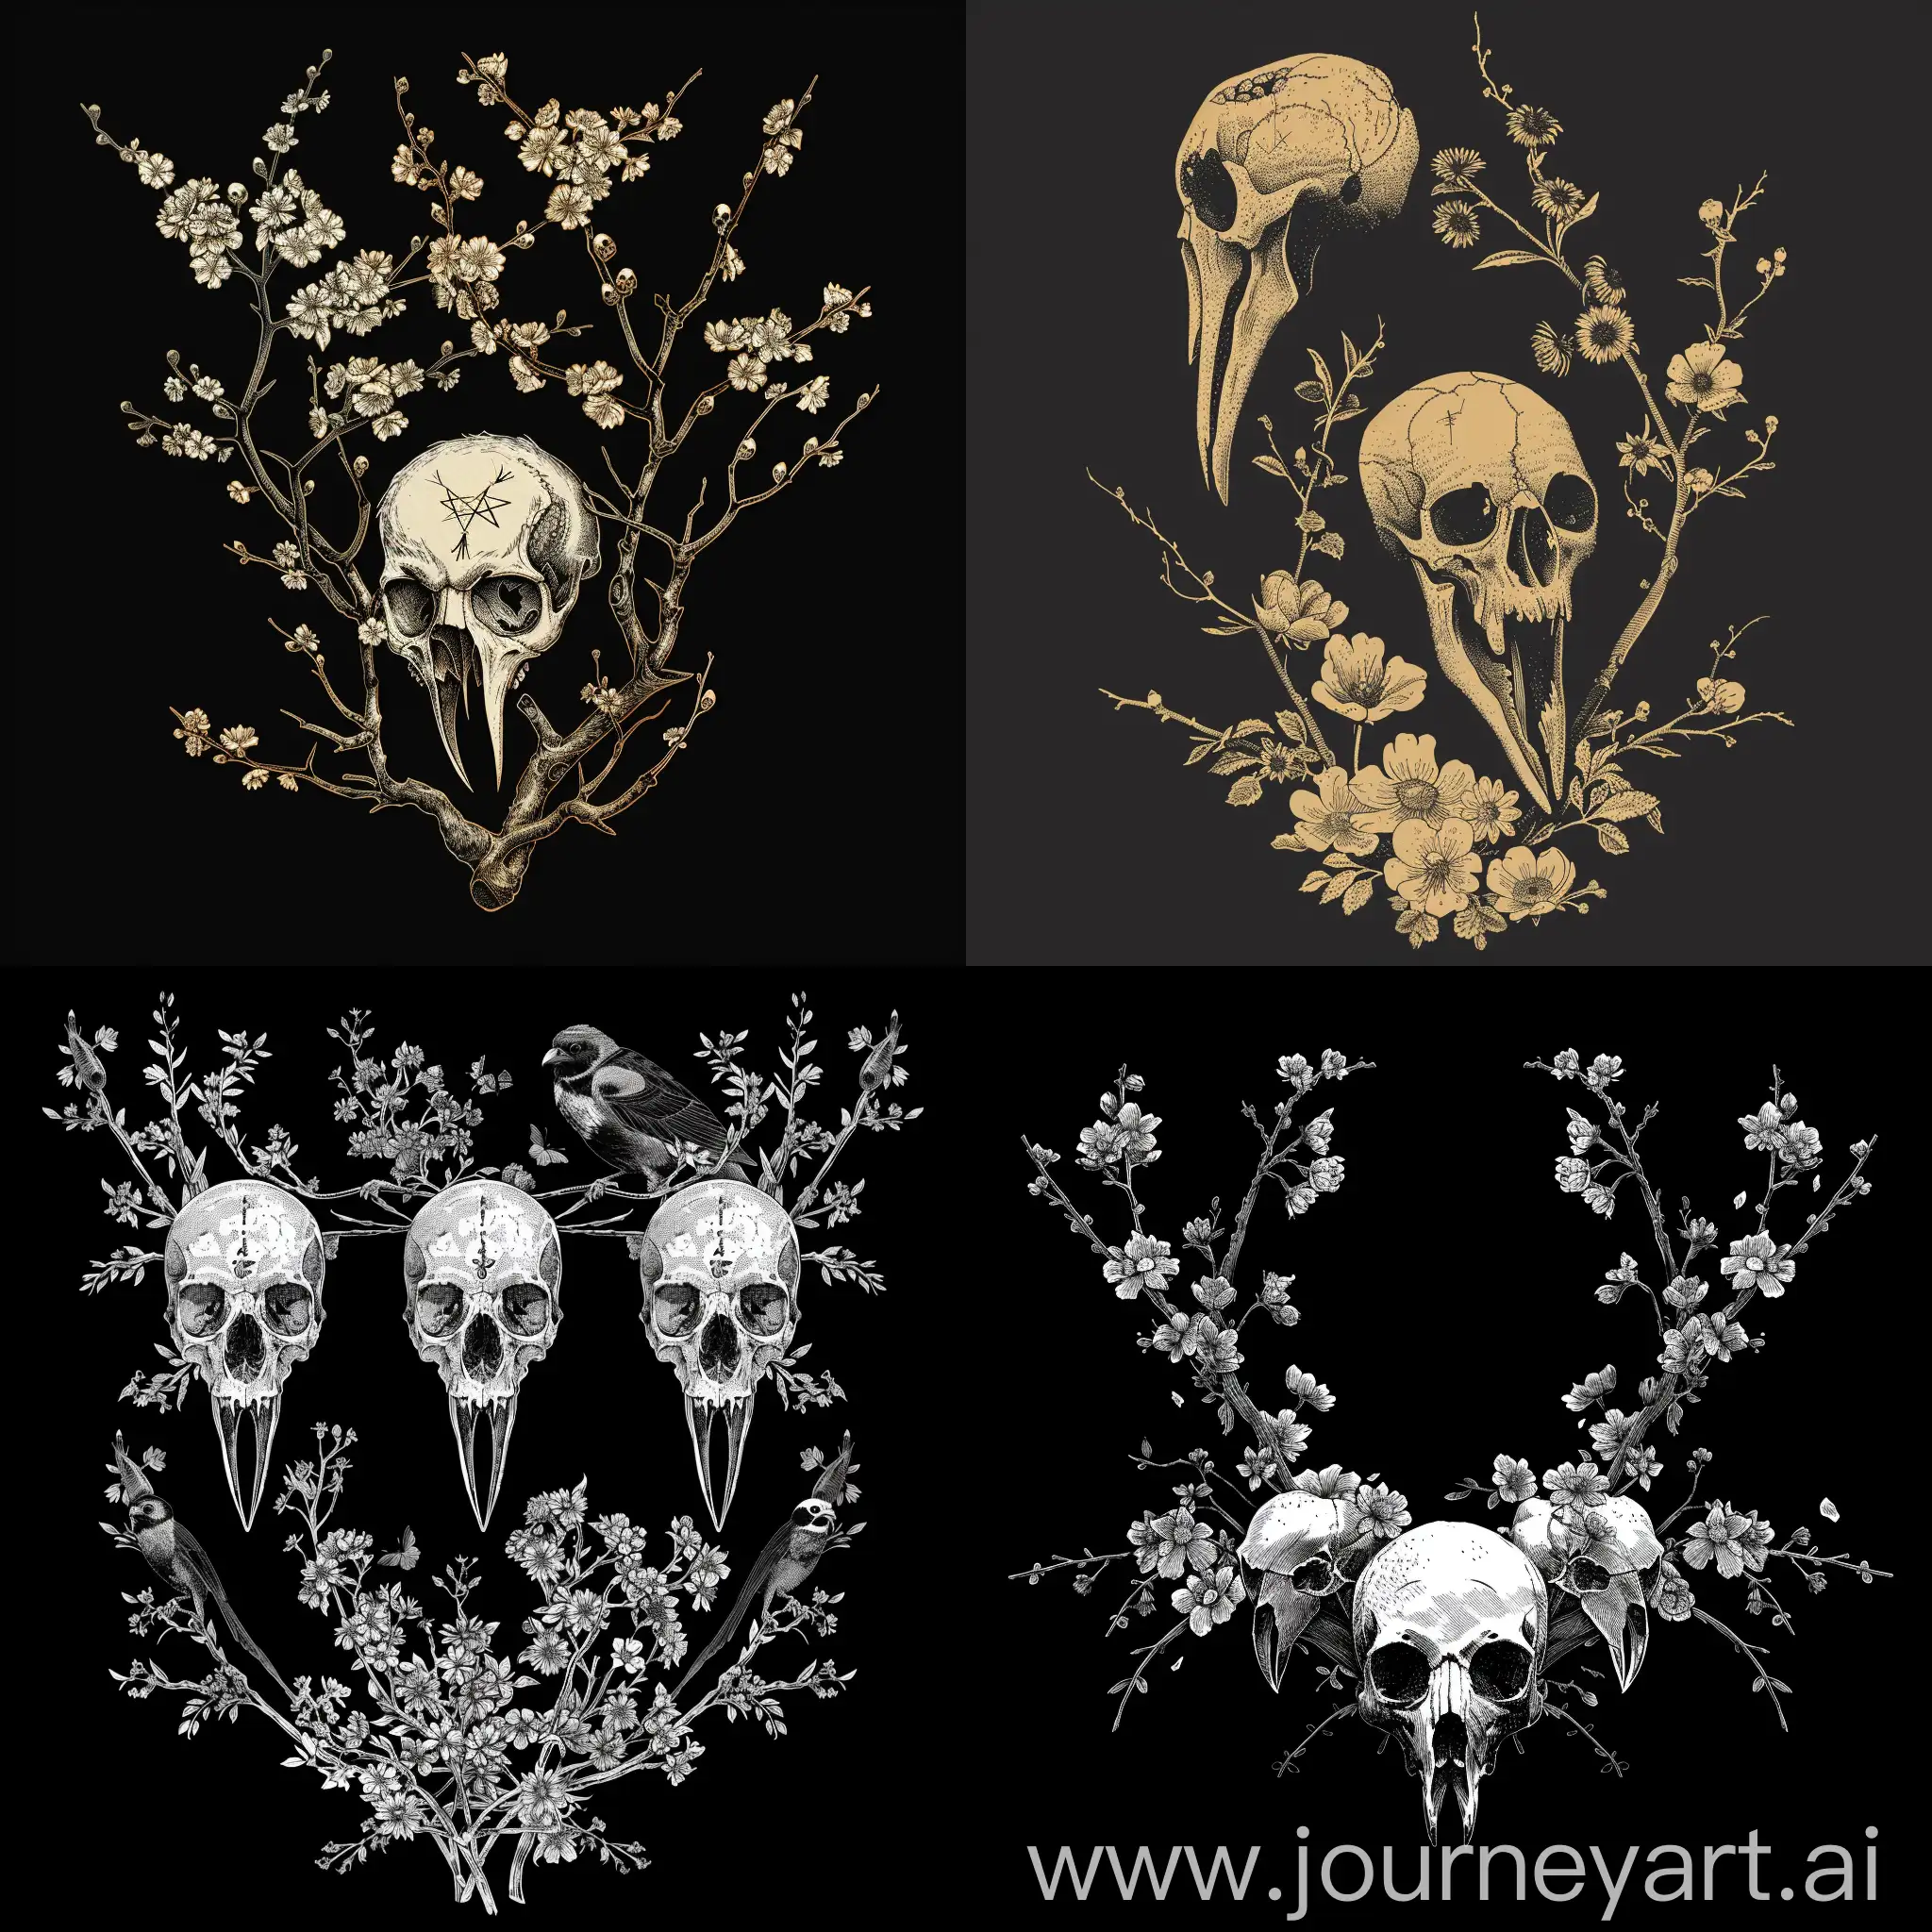 Engraved-Bird-Skulls-and-Flowers-on-Black-Background